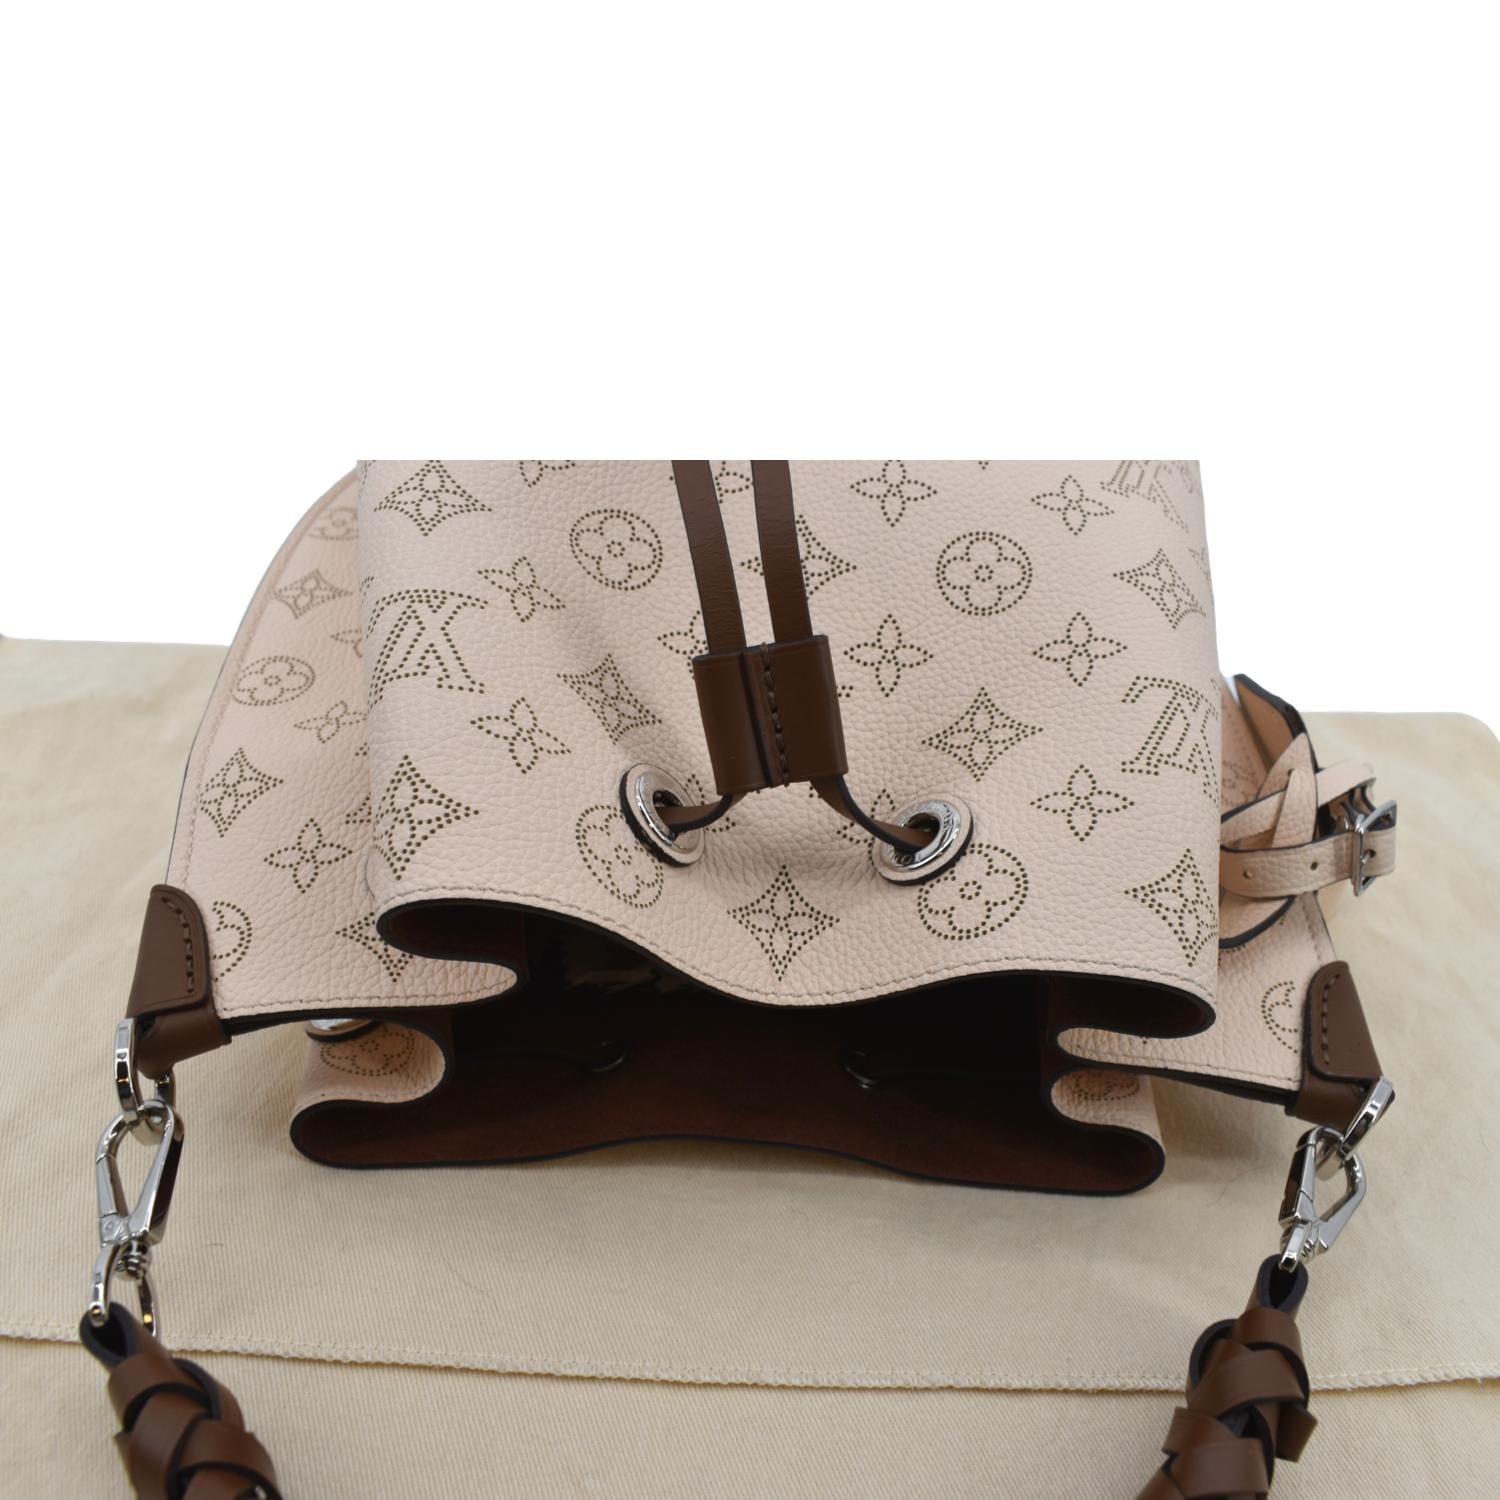 Louis Vuitton Muria Mahina Bucket Bag Brown Silver Leather Purse